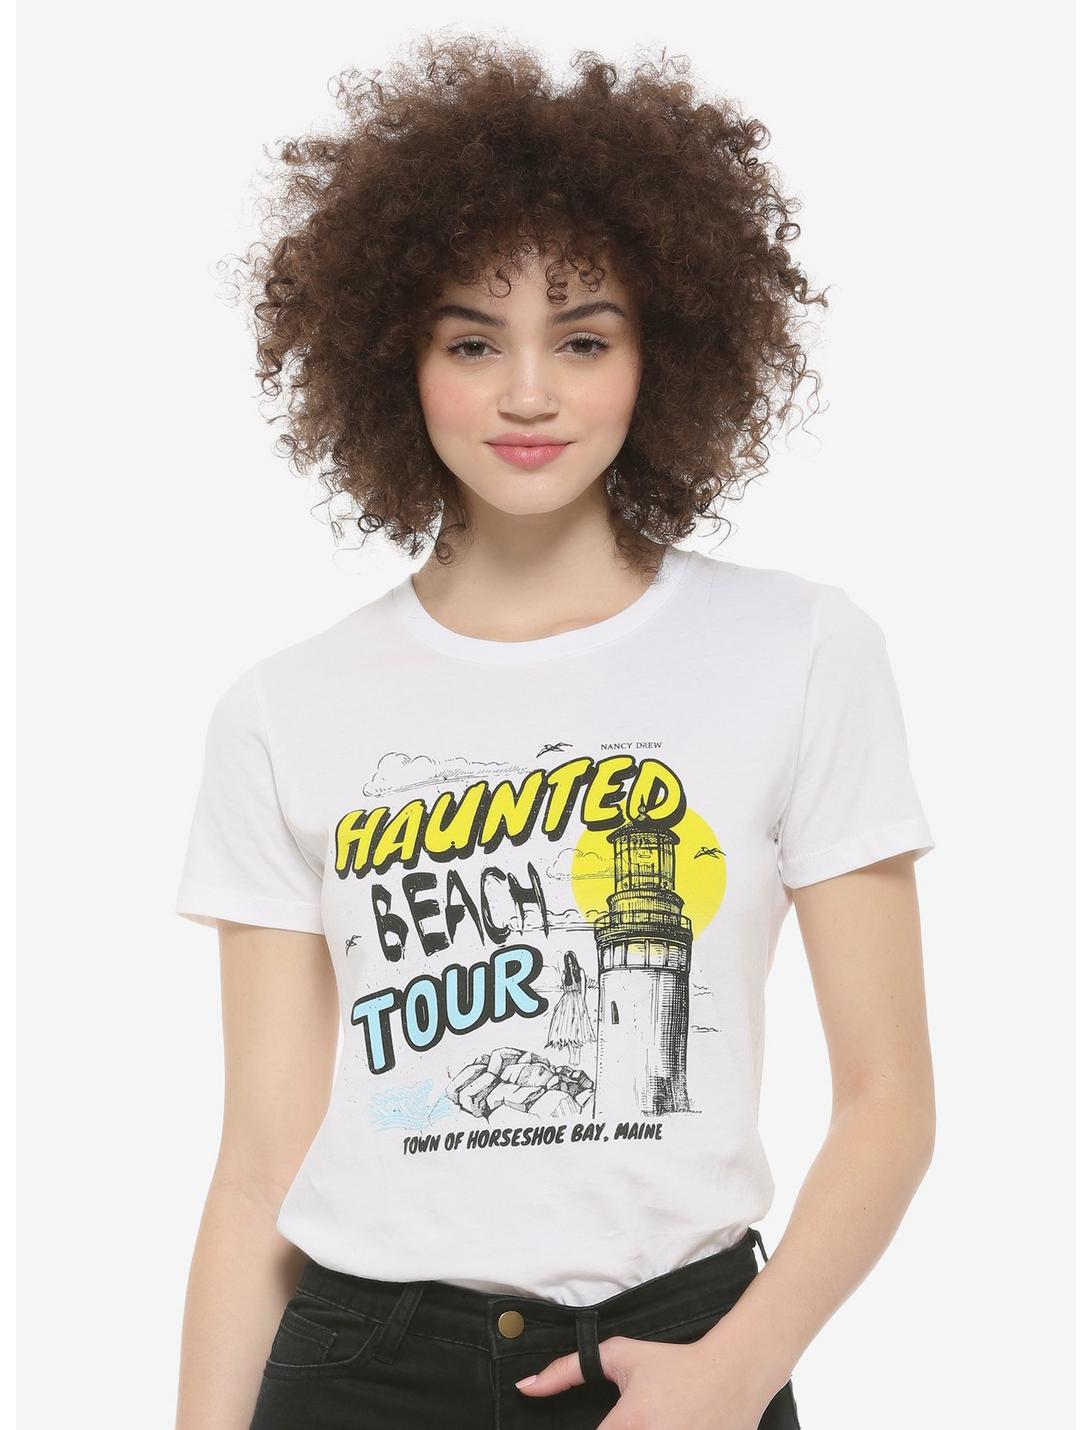 Nancy Drew Haunted Beach Tour Girls T-Shirt, MULTI, hi-res